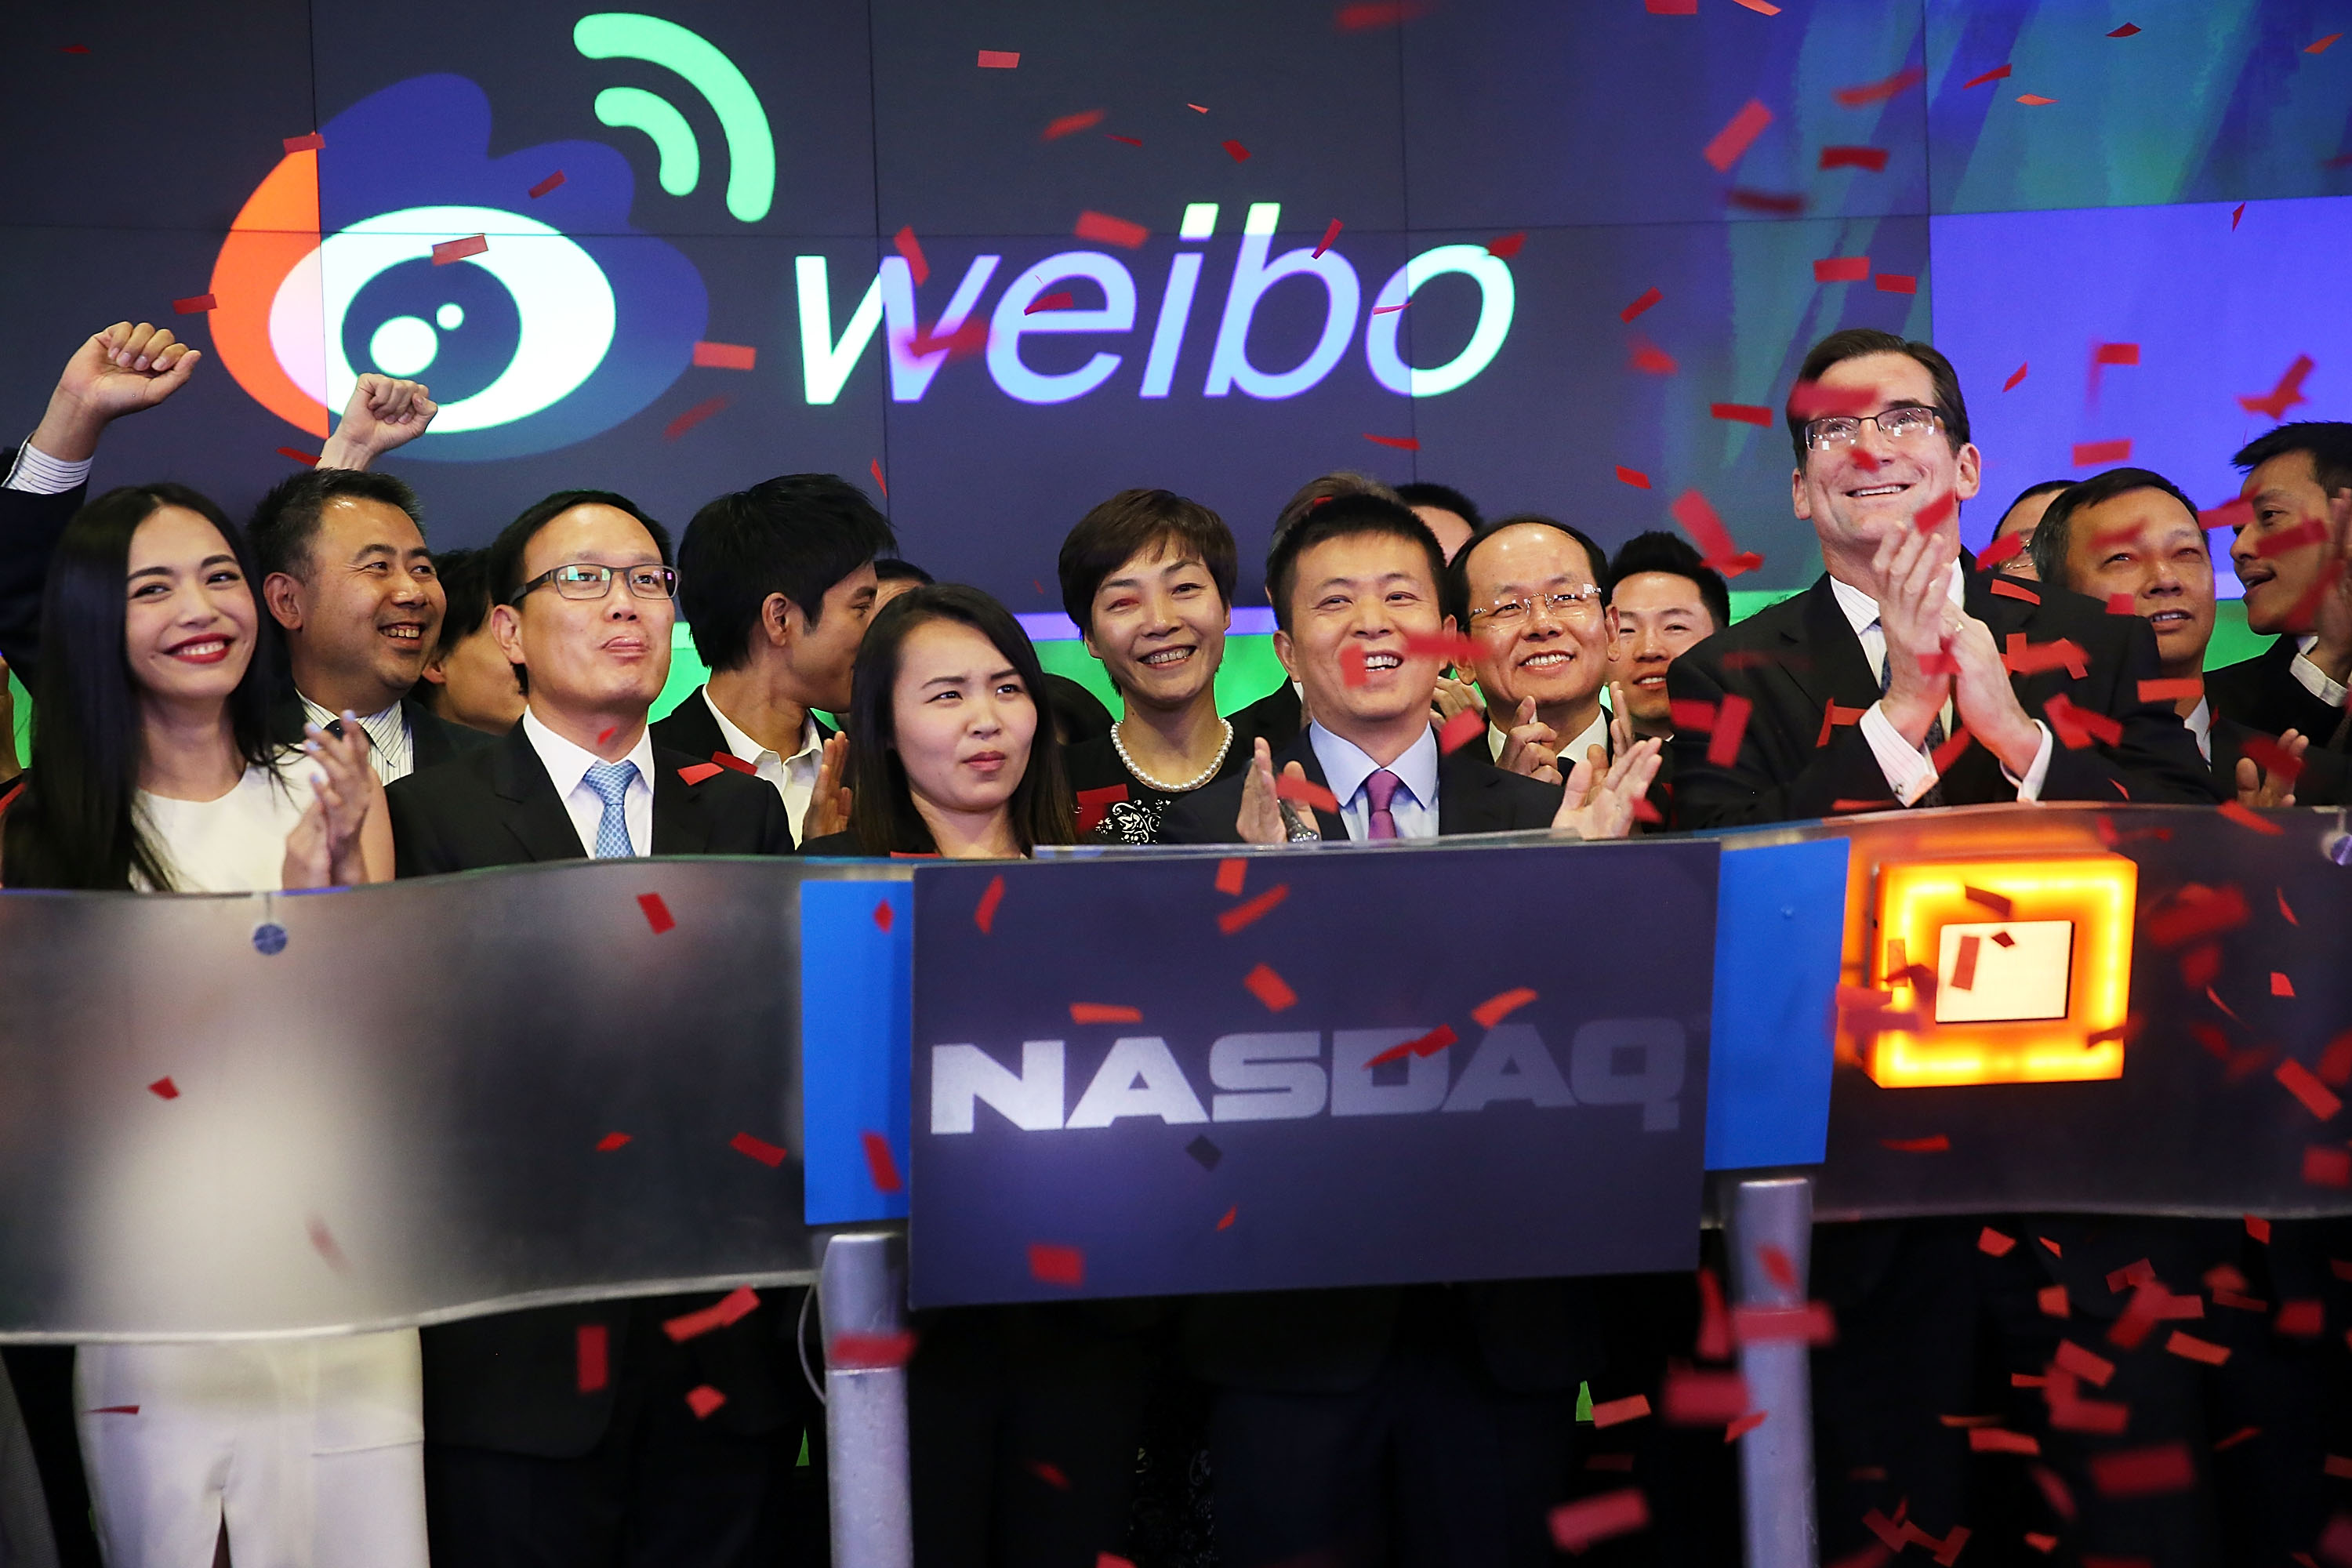 Weibo And Sabre Beginning Trading On NASDAQ